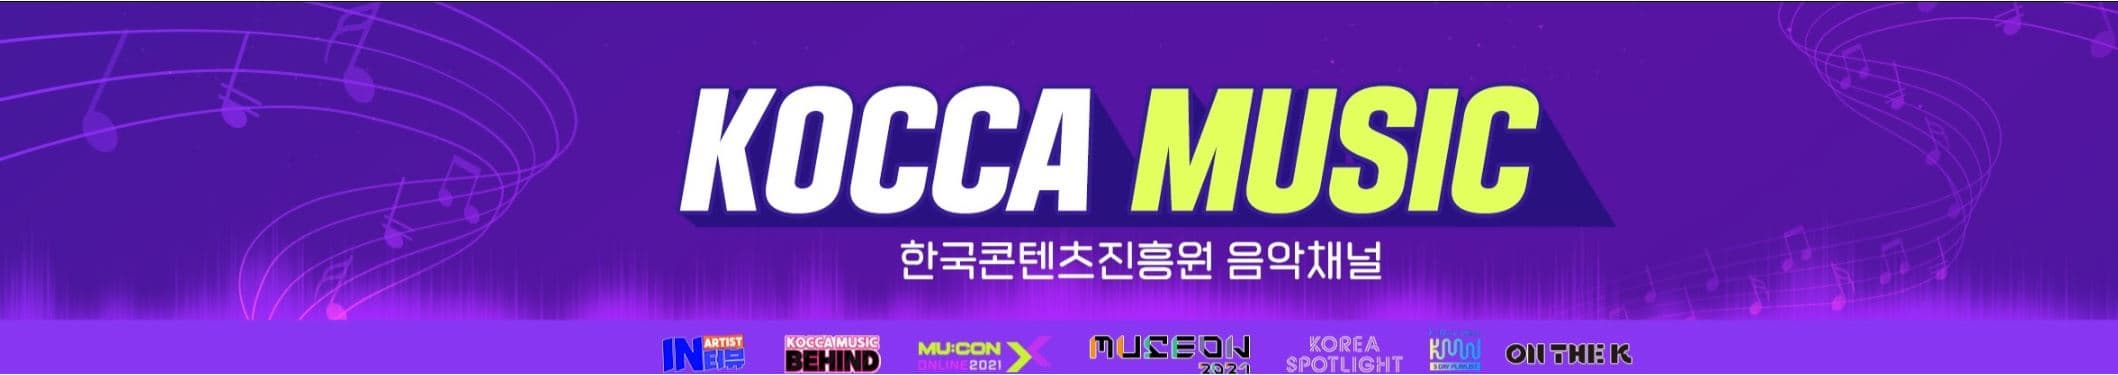 KOCCA MUSIC ㅣ 한국콘텐츠진흥원 음악채널 ㅣ IN터뷰(ARTIST) KOCCAMUSIC BEHIBD MU:CONONLINE2021 MUSEON2021 KOREA SPOTLIBHT ON THE K